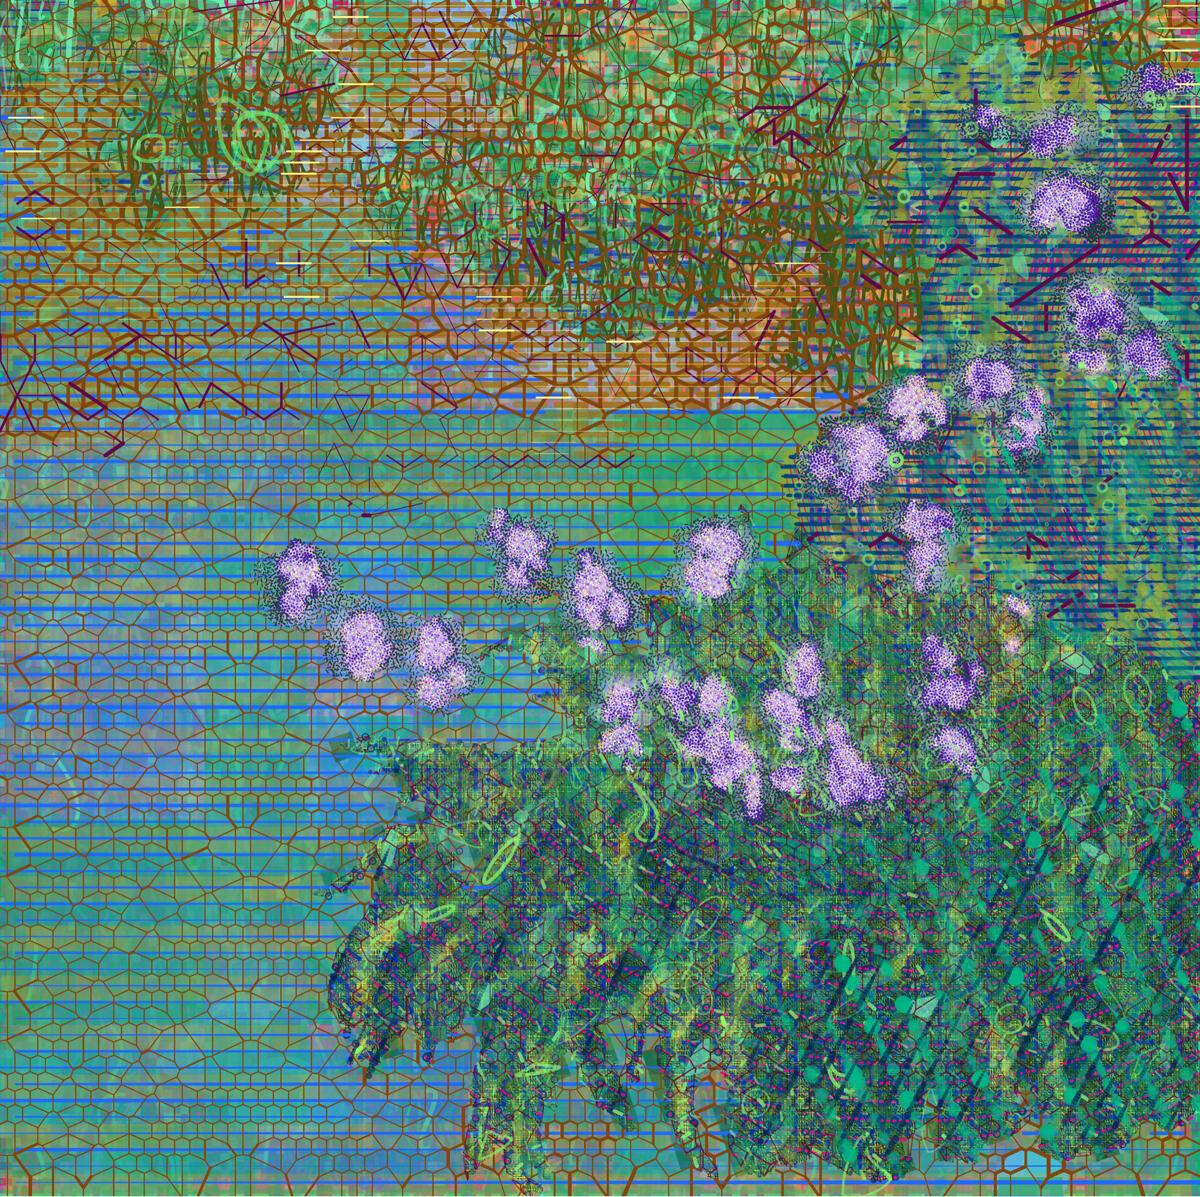 painting by Matt Kane - “Irises after Claude Monet”